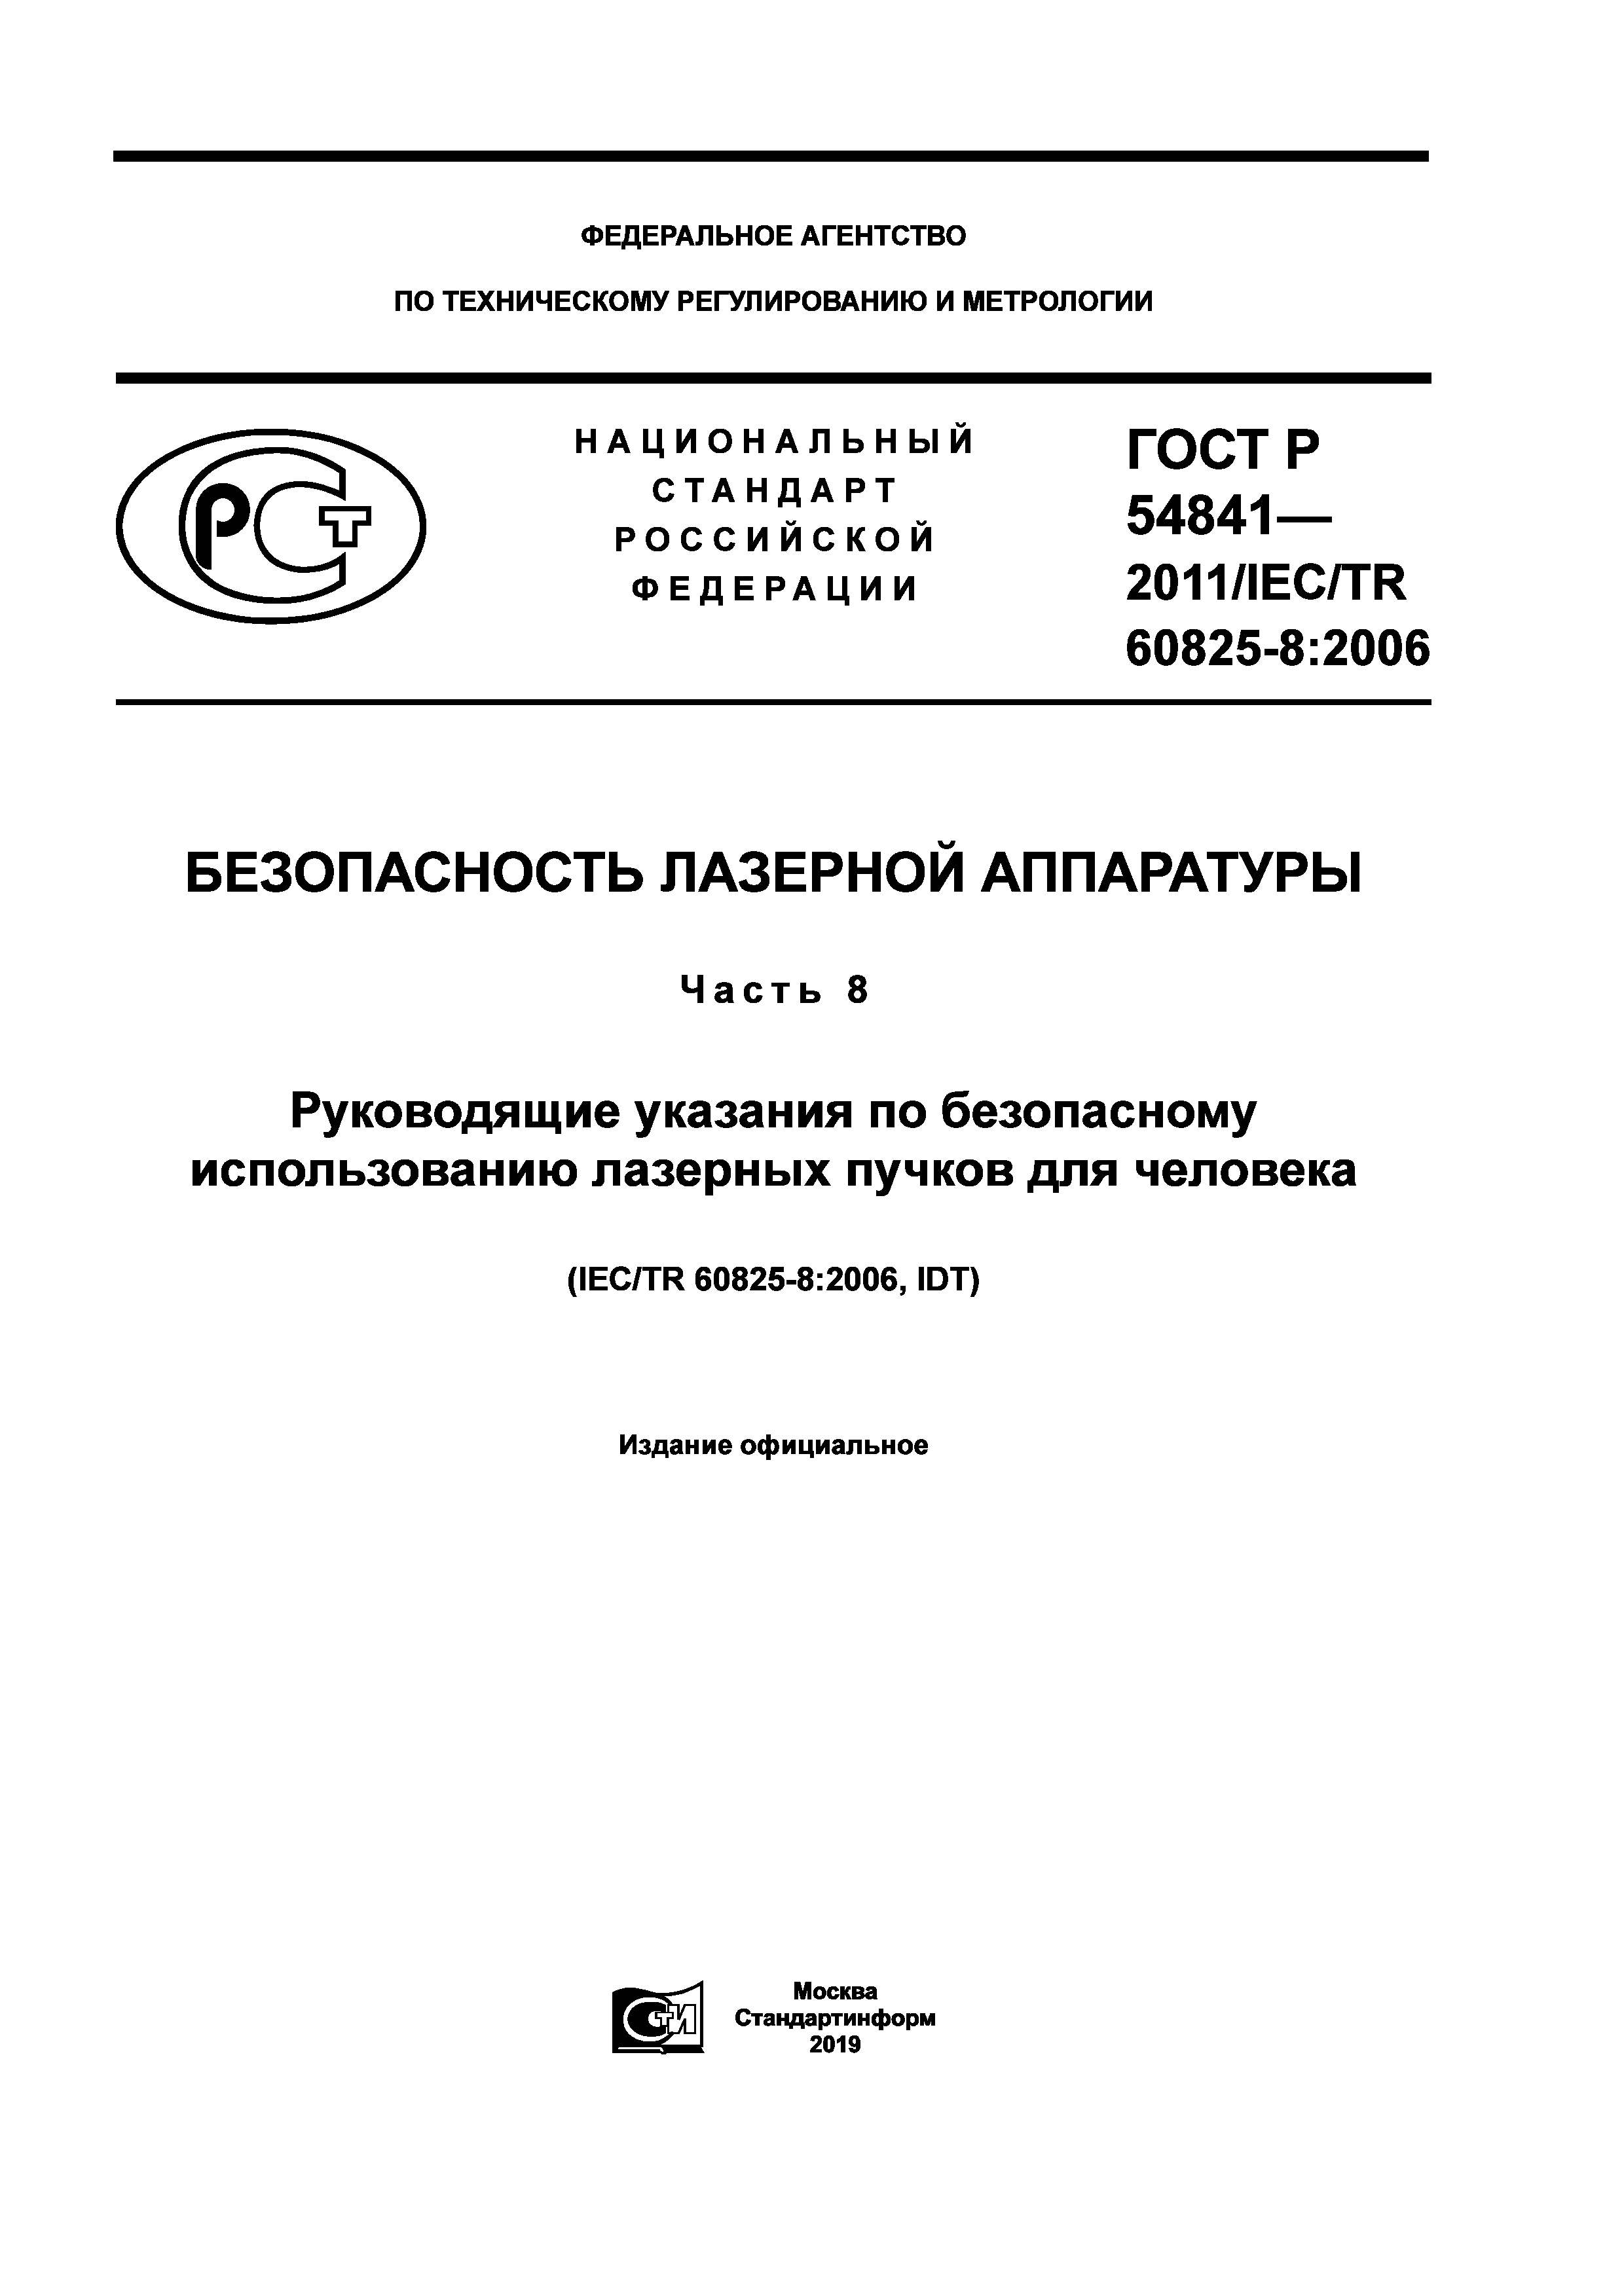 ГОСТ Р 54841-2011